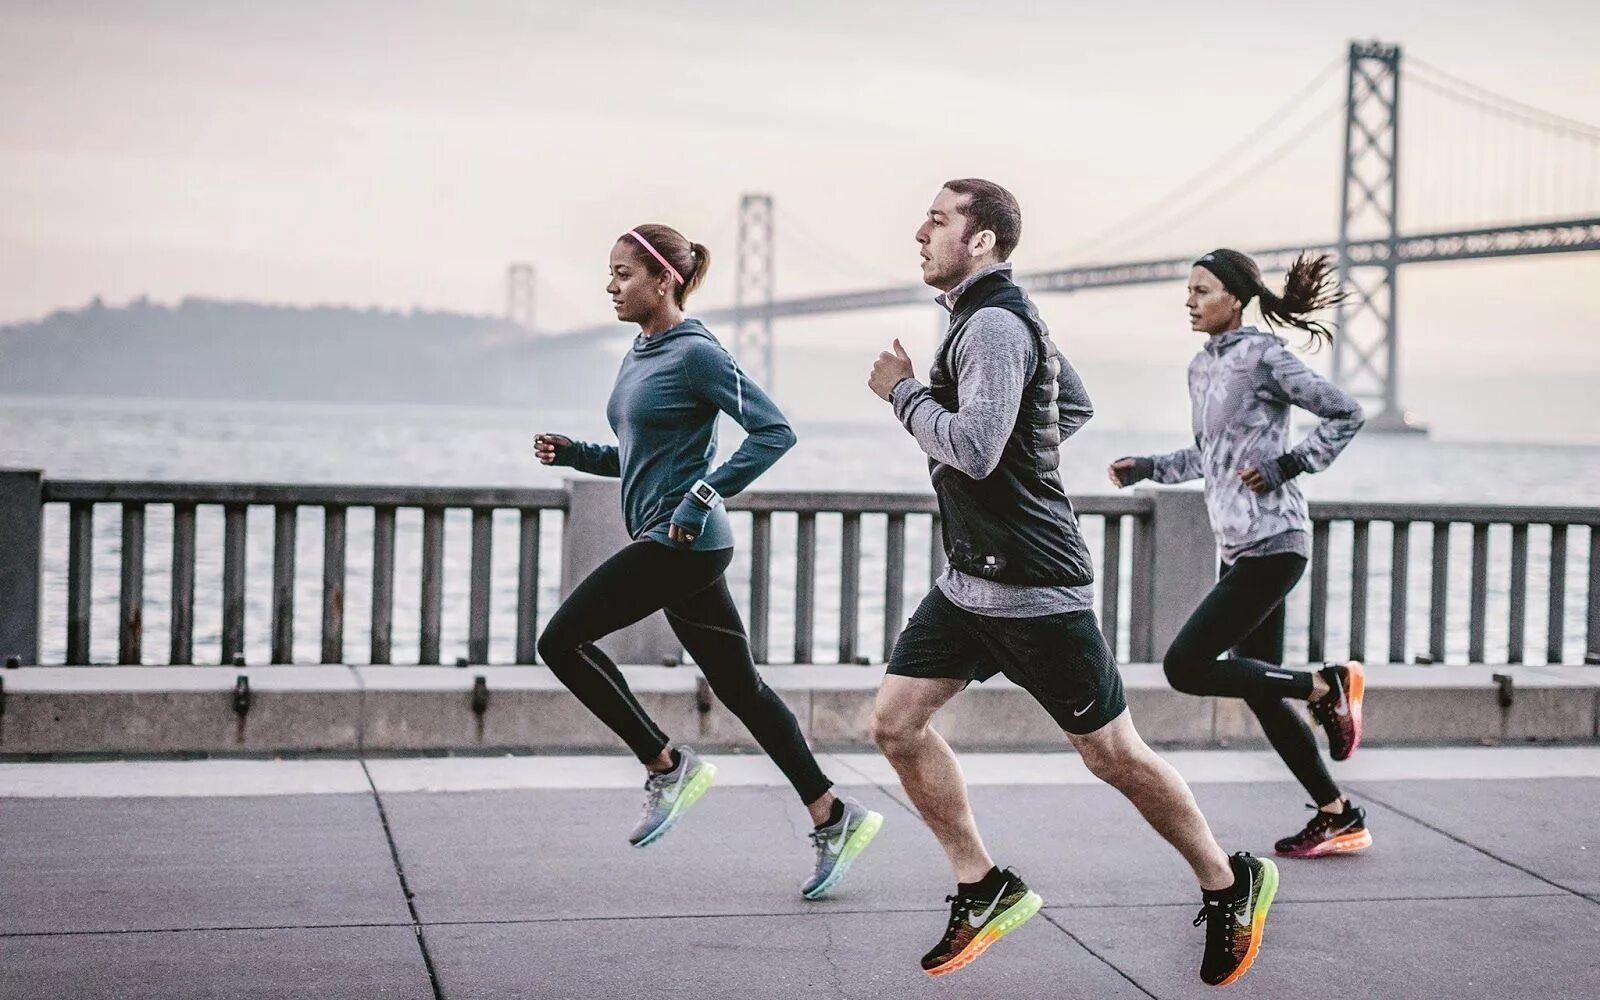 People go in for sports. Nike Running. Nike Running бег. Занятие спортом. Фотосессия в спортивном стиле.